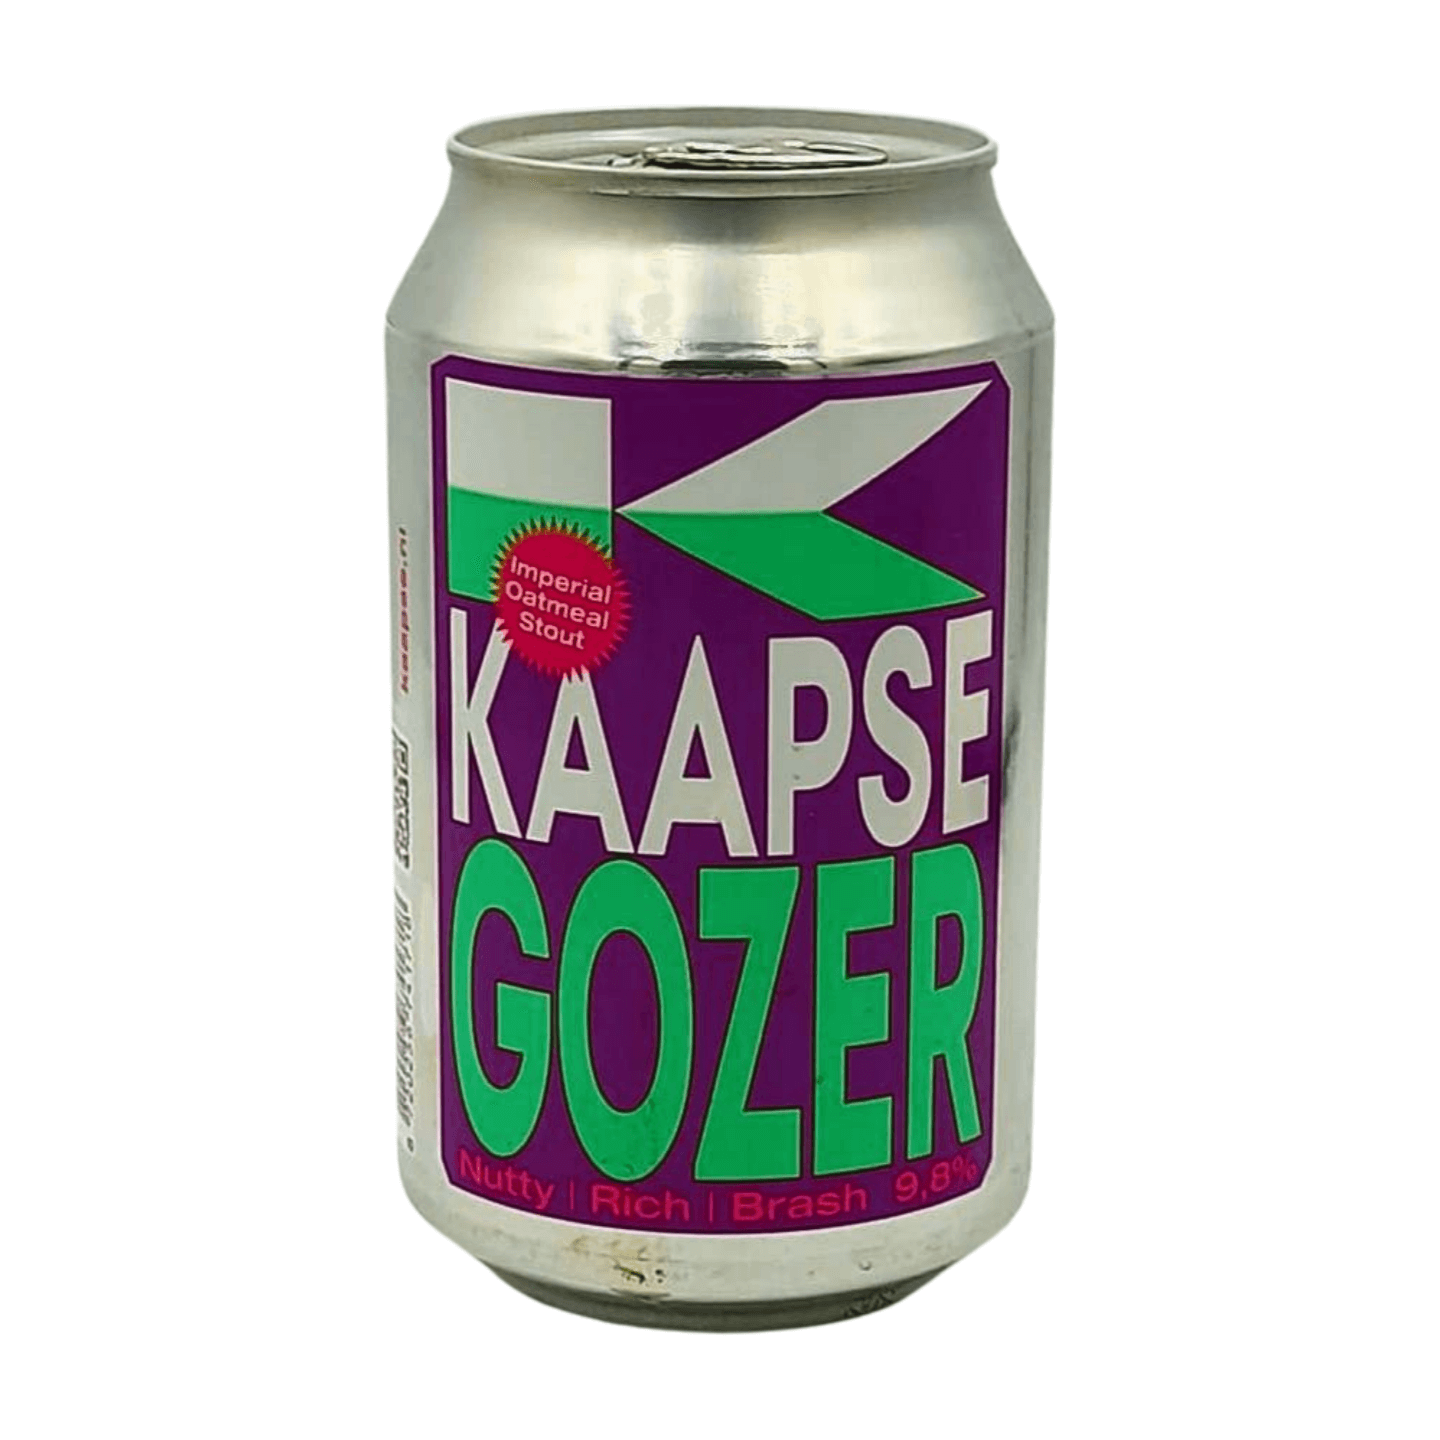 Kaapse Brouwers Gozer | Imperial Oatmeal Stout Webshop Online Verdins Bierwinkel Rotterdam